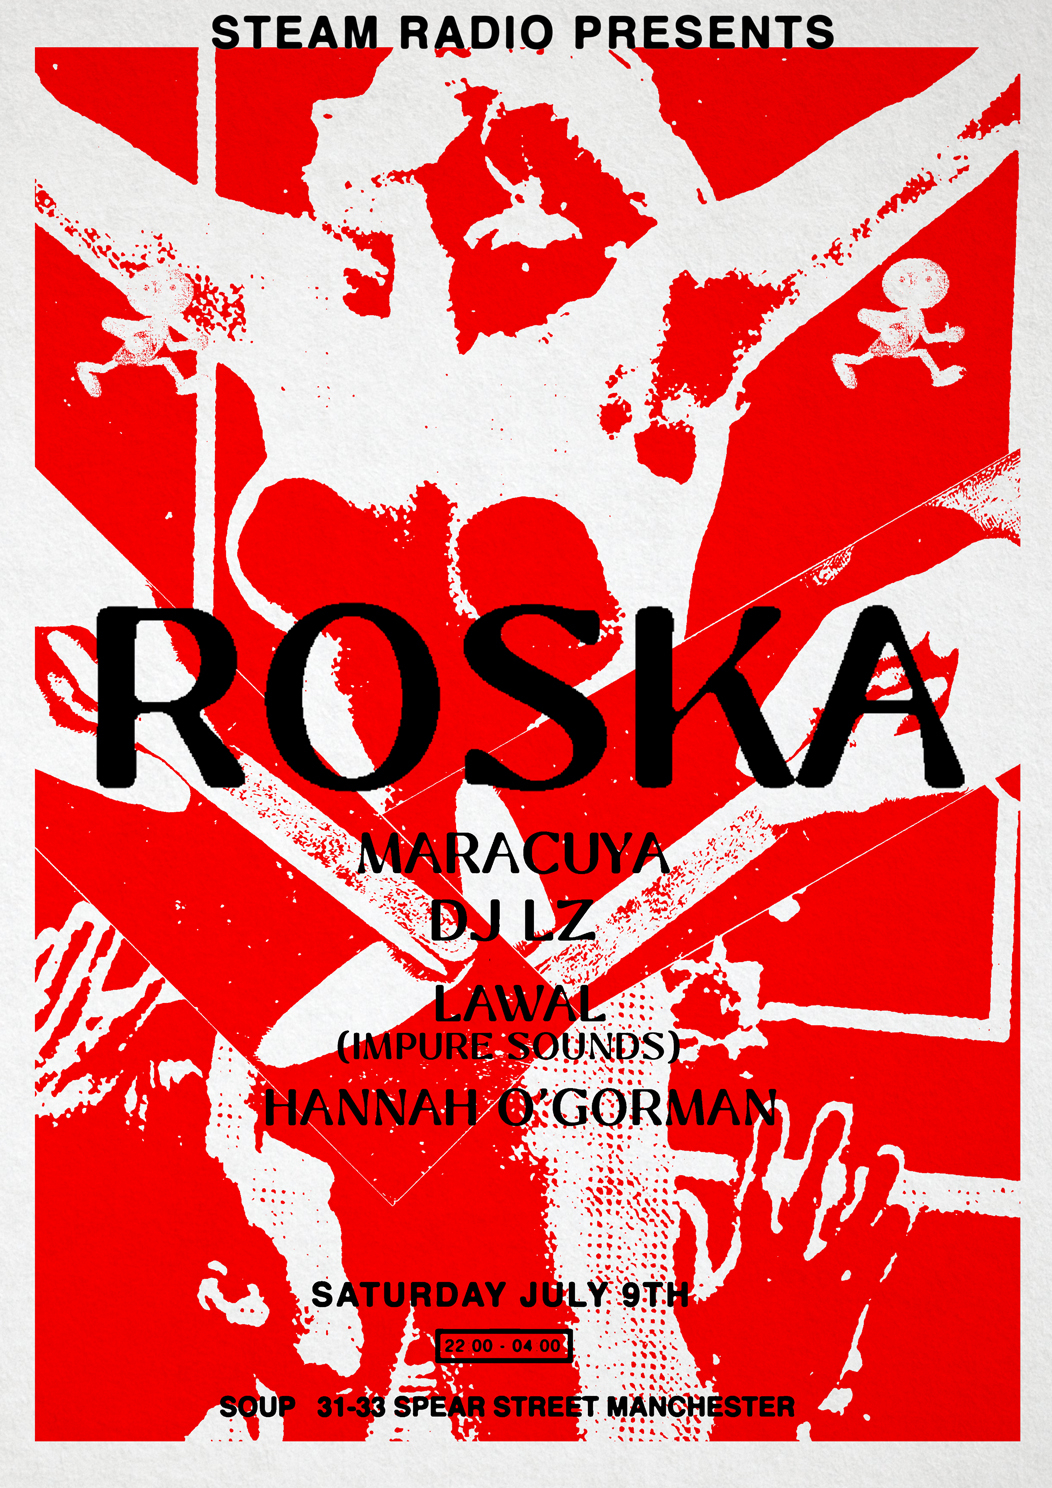 Steam Radio presents: Roska, Maracuya, DJ LZ, Lawal, Hannah O'Gorman - Flyer front